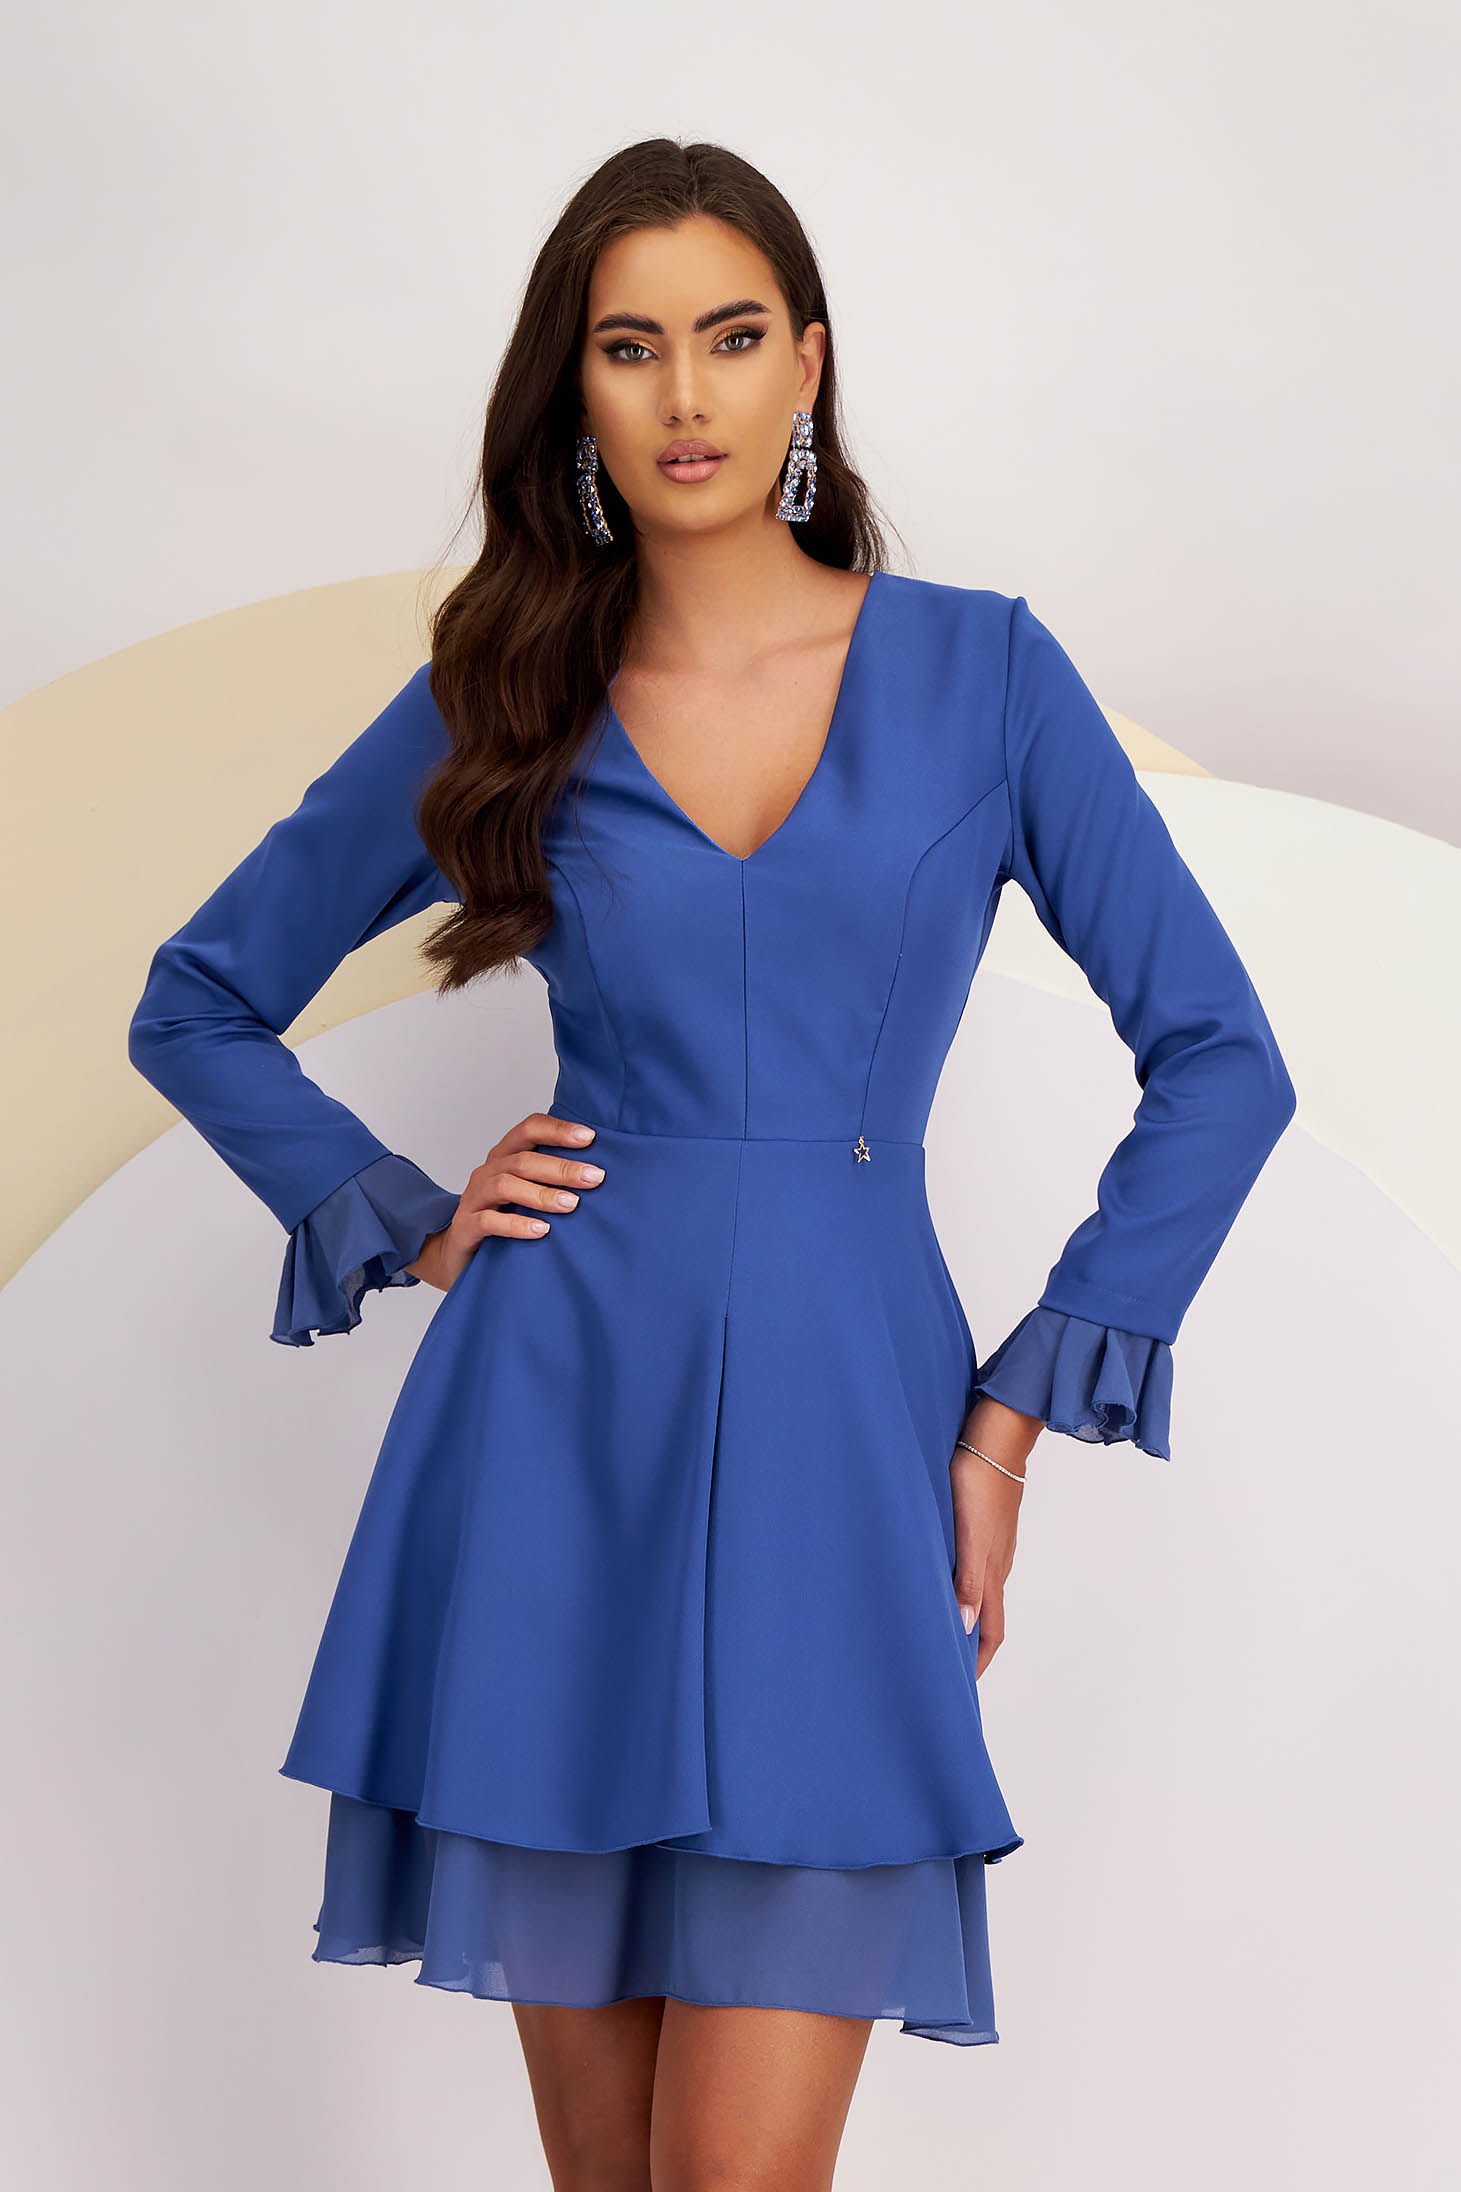 Blue Short Elastic Fabric Dress in Clos with Veil Ruffles - StarShinerS